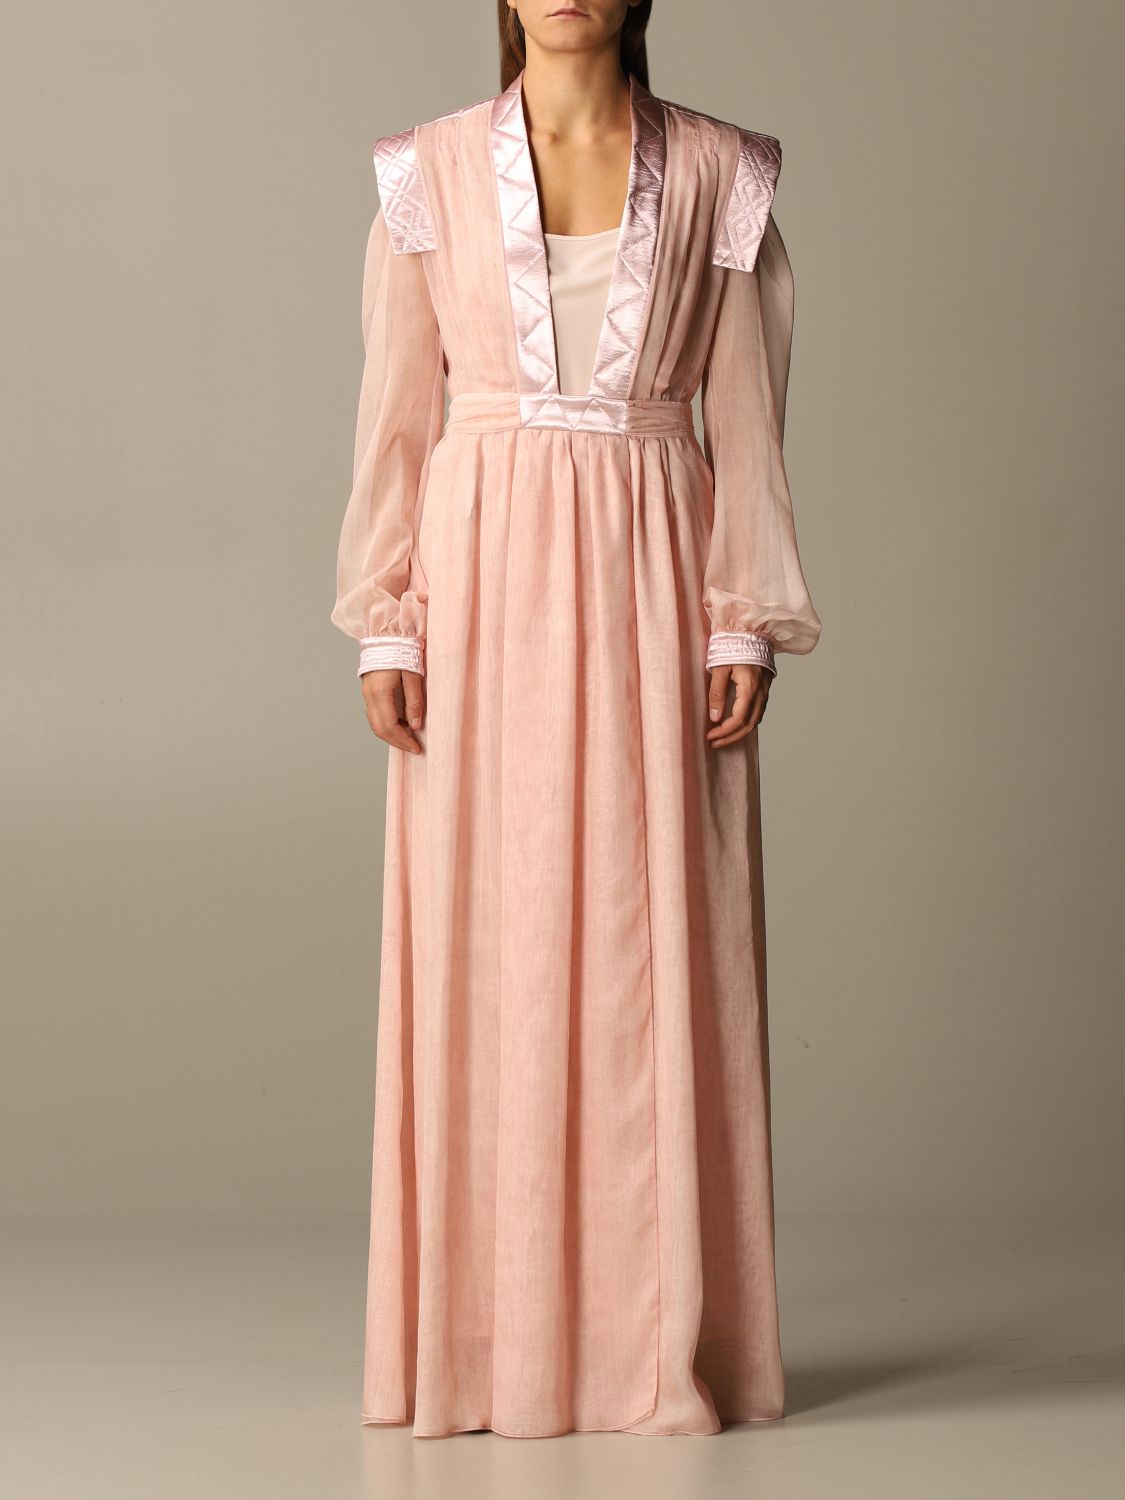 Dress Philosophy Di Lorenzo Serafini: Philosophy Di Lorenzo Serafini long dress with quilted details pink 1